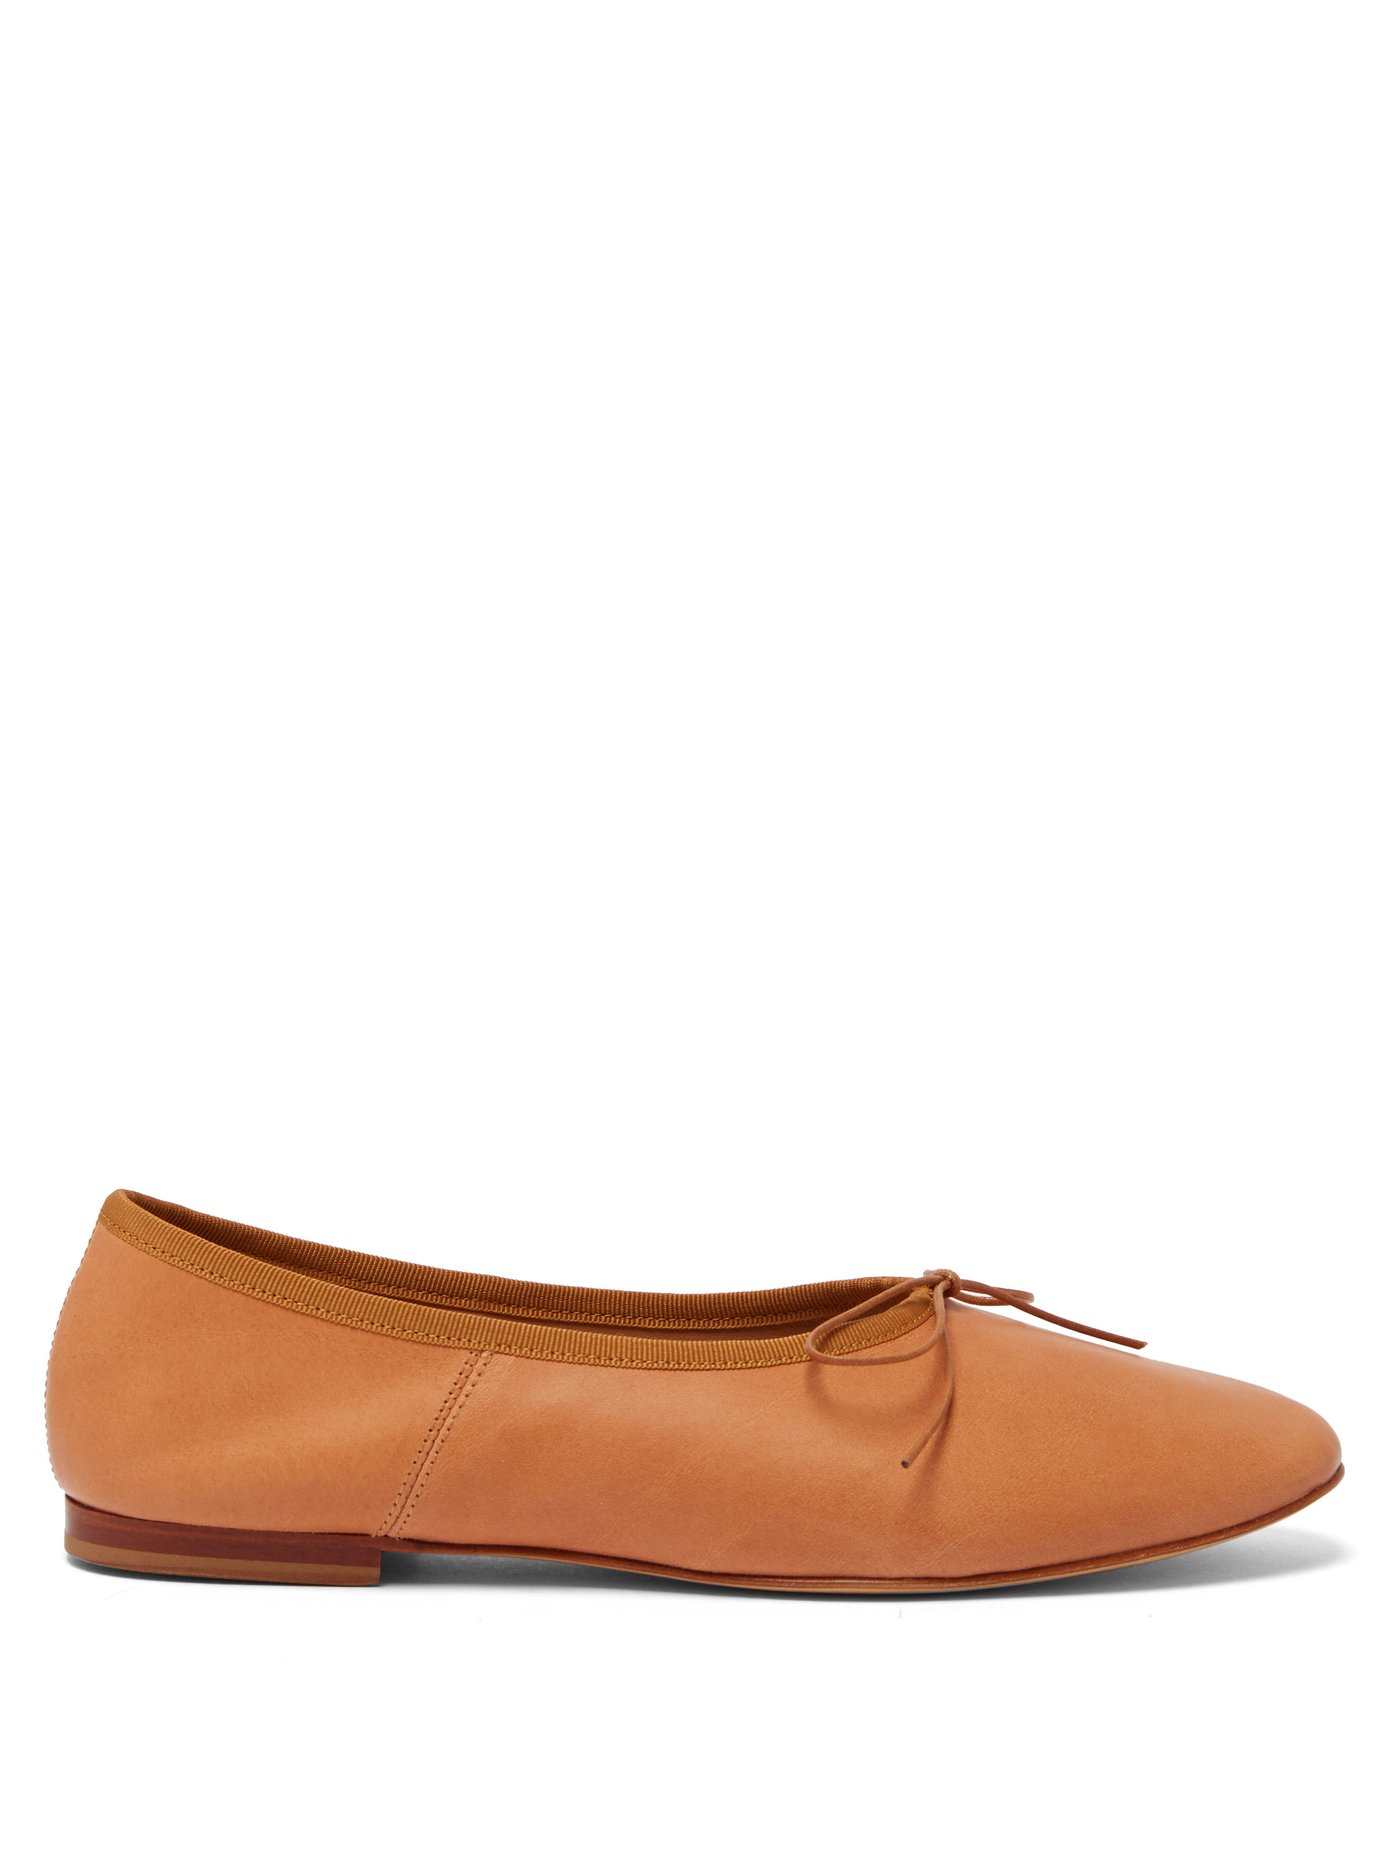 tan leather ballet shoes